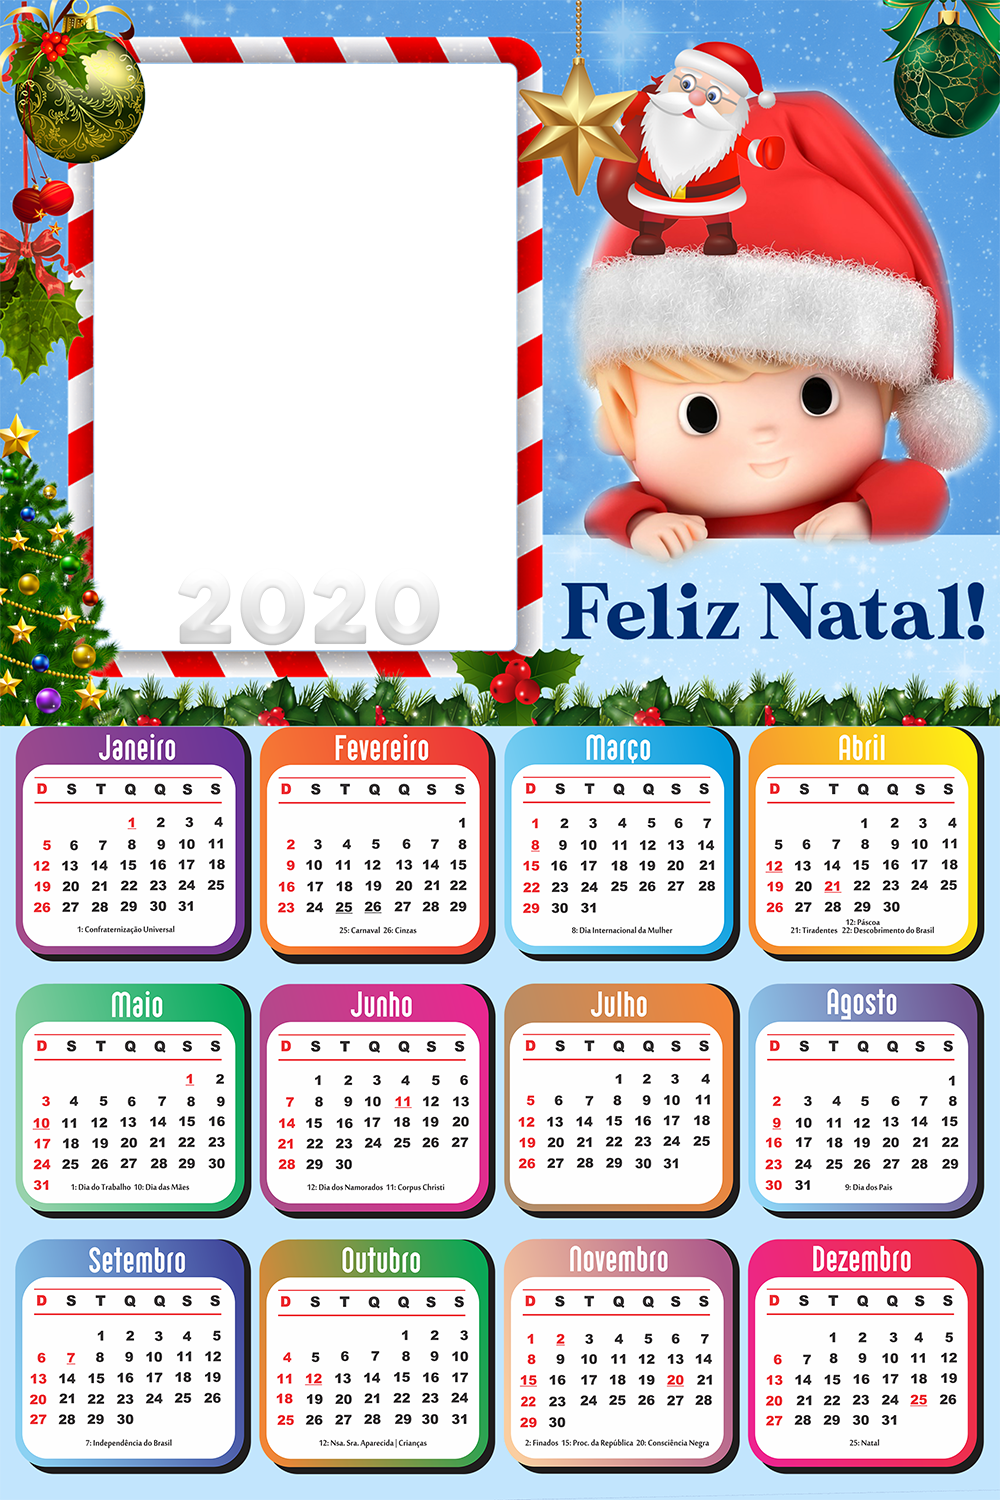 Calendário natal papai noel 2020